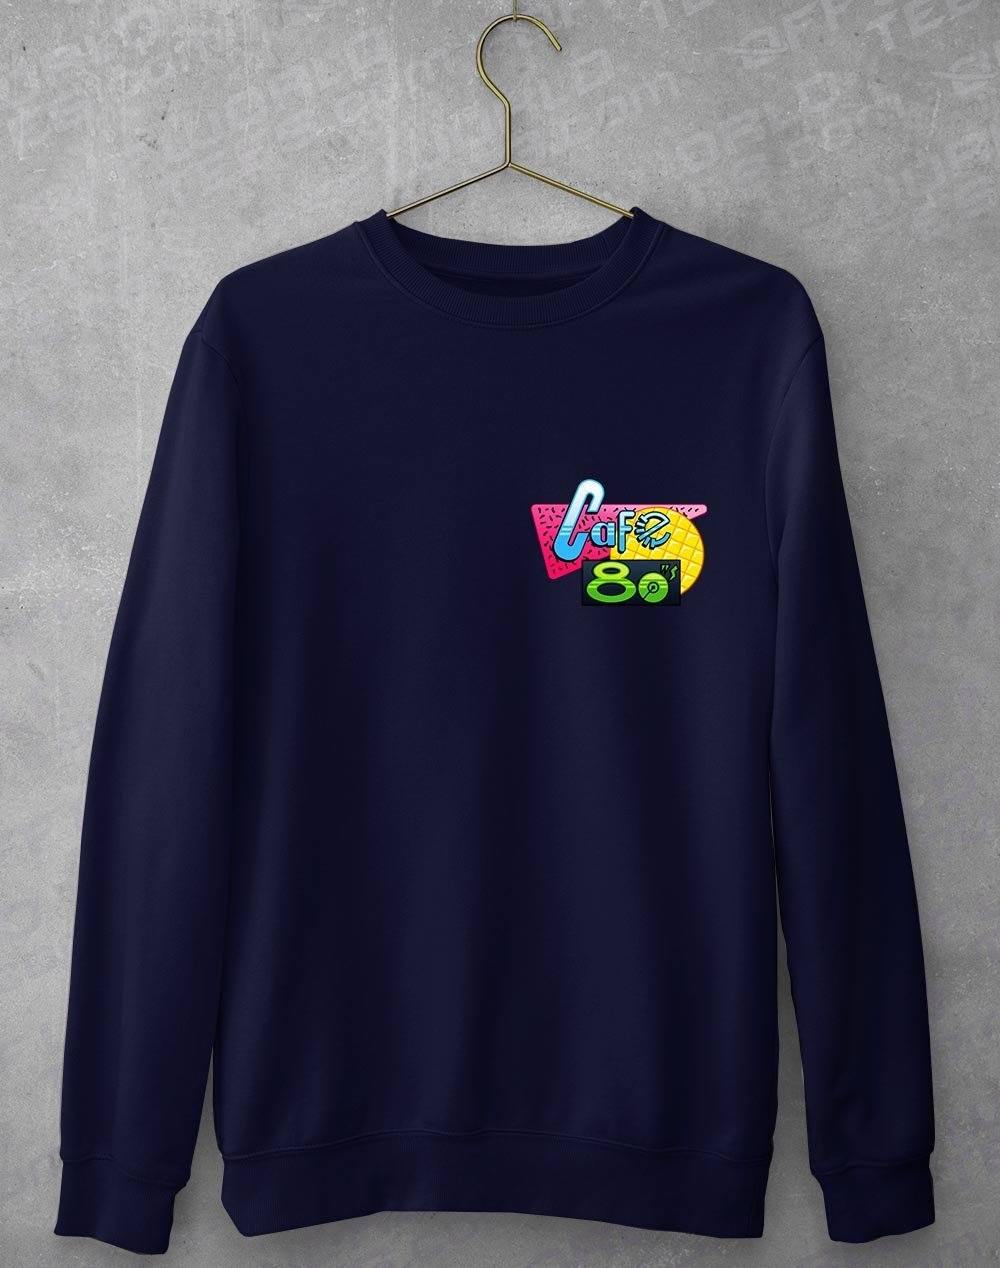 Cafe 80s Pocket Print Sweatshirt S / Oxford Navy  - Off World Tees